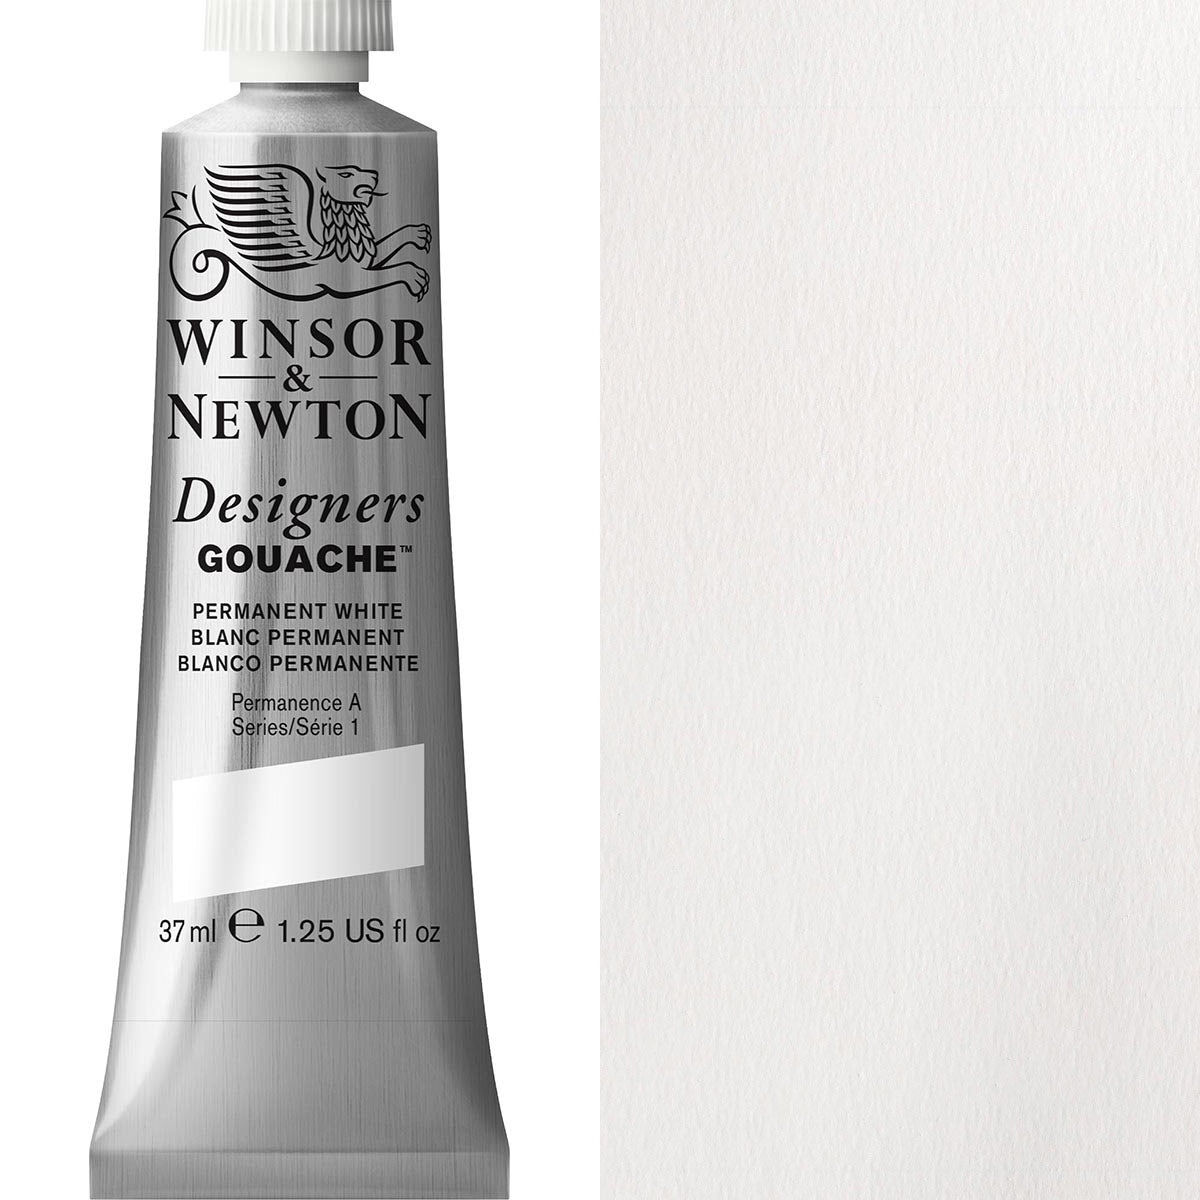 Winsor and Newton - Designers Gouache - 37ml - Permanent White